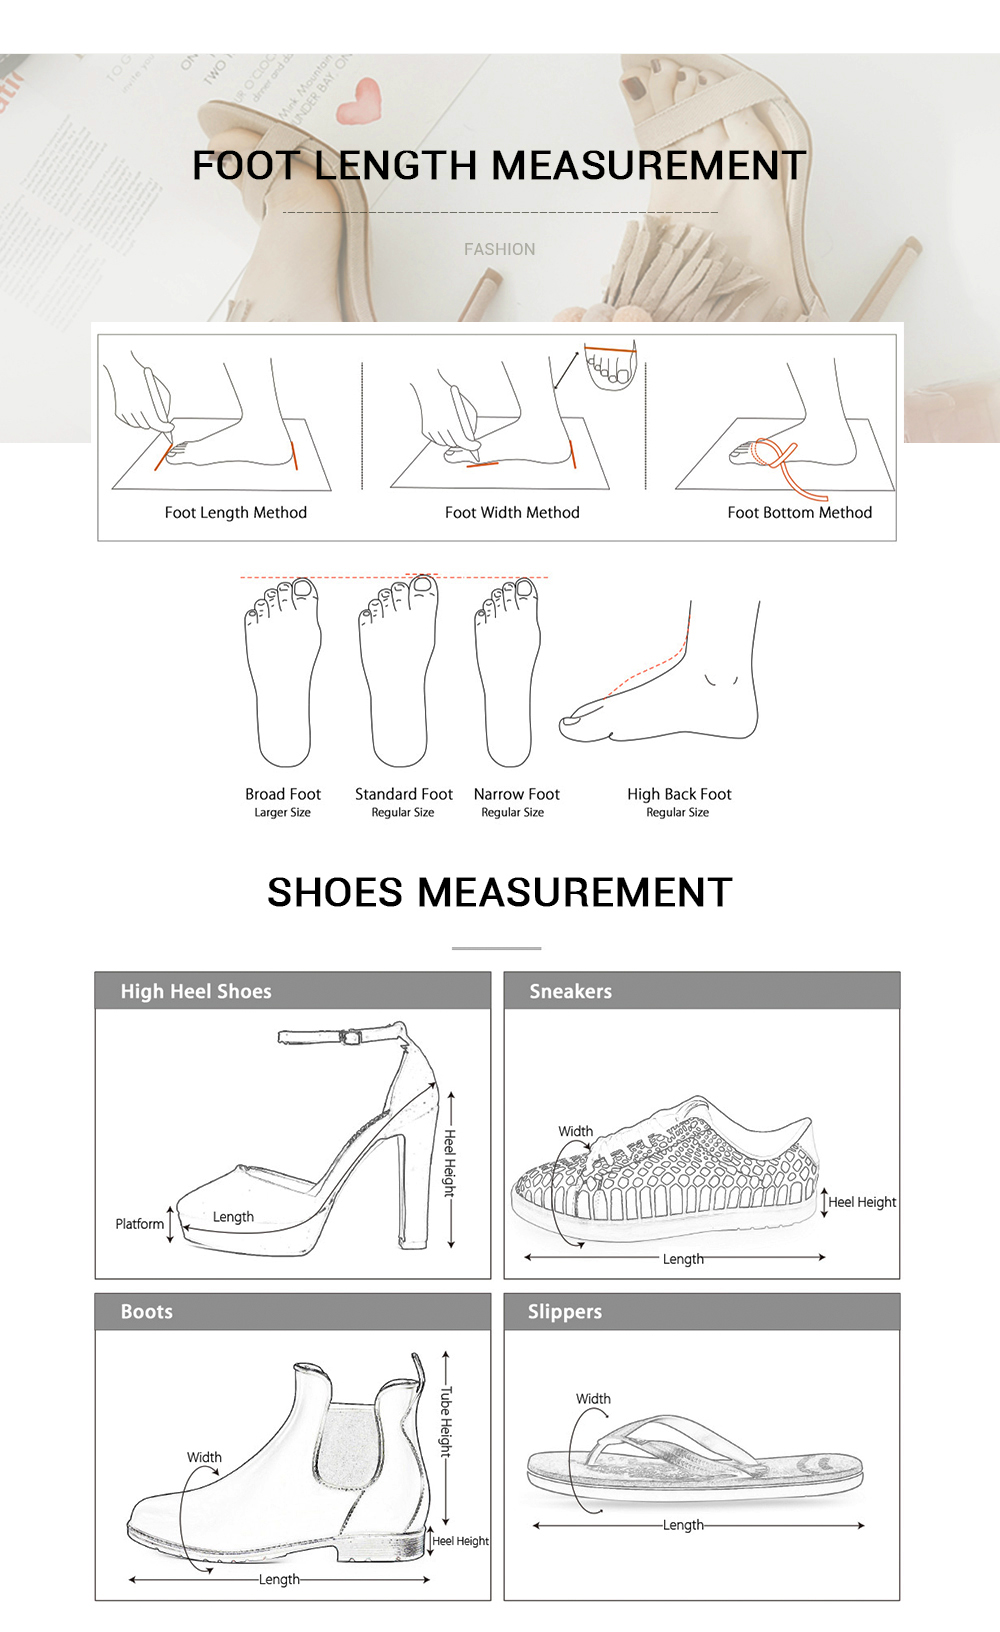 Trendy Open Toe Fringed Ankle Strap Pompon Stiletto Heel Women Sandals